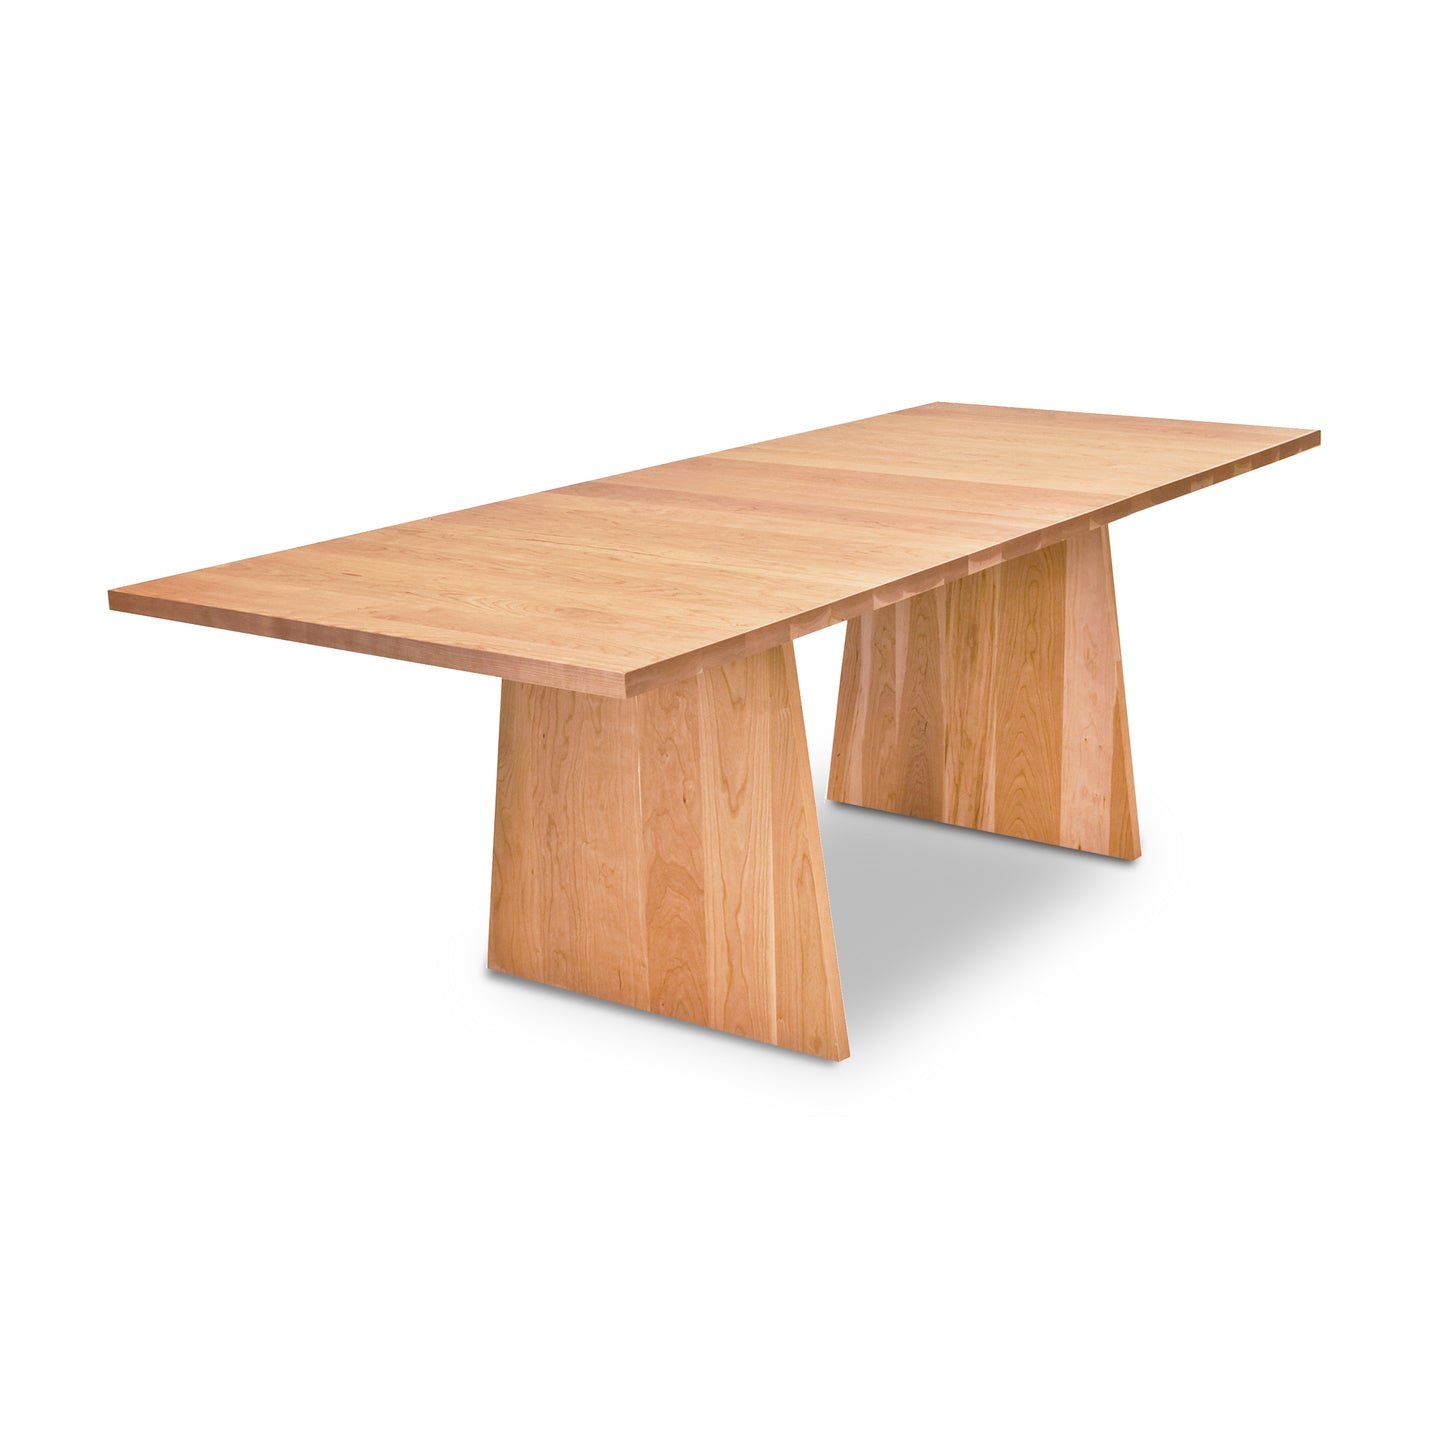 An eco-friendly Lyndon Furniture Modern Designer Extension Table.